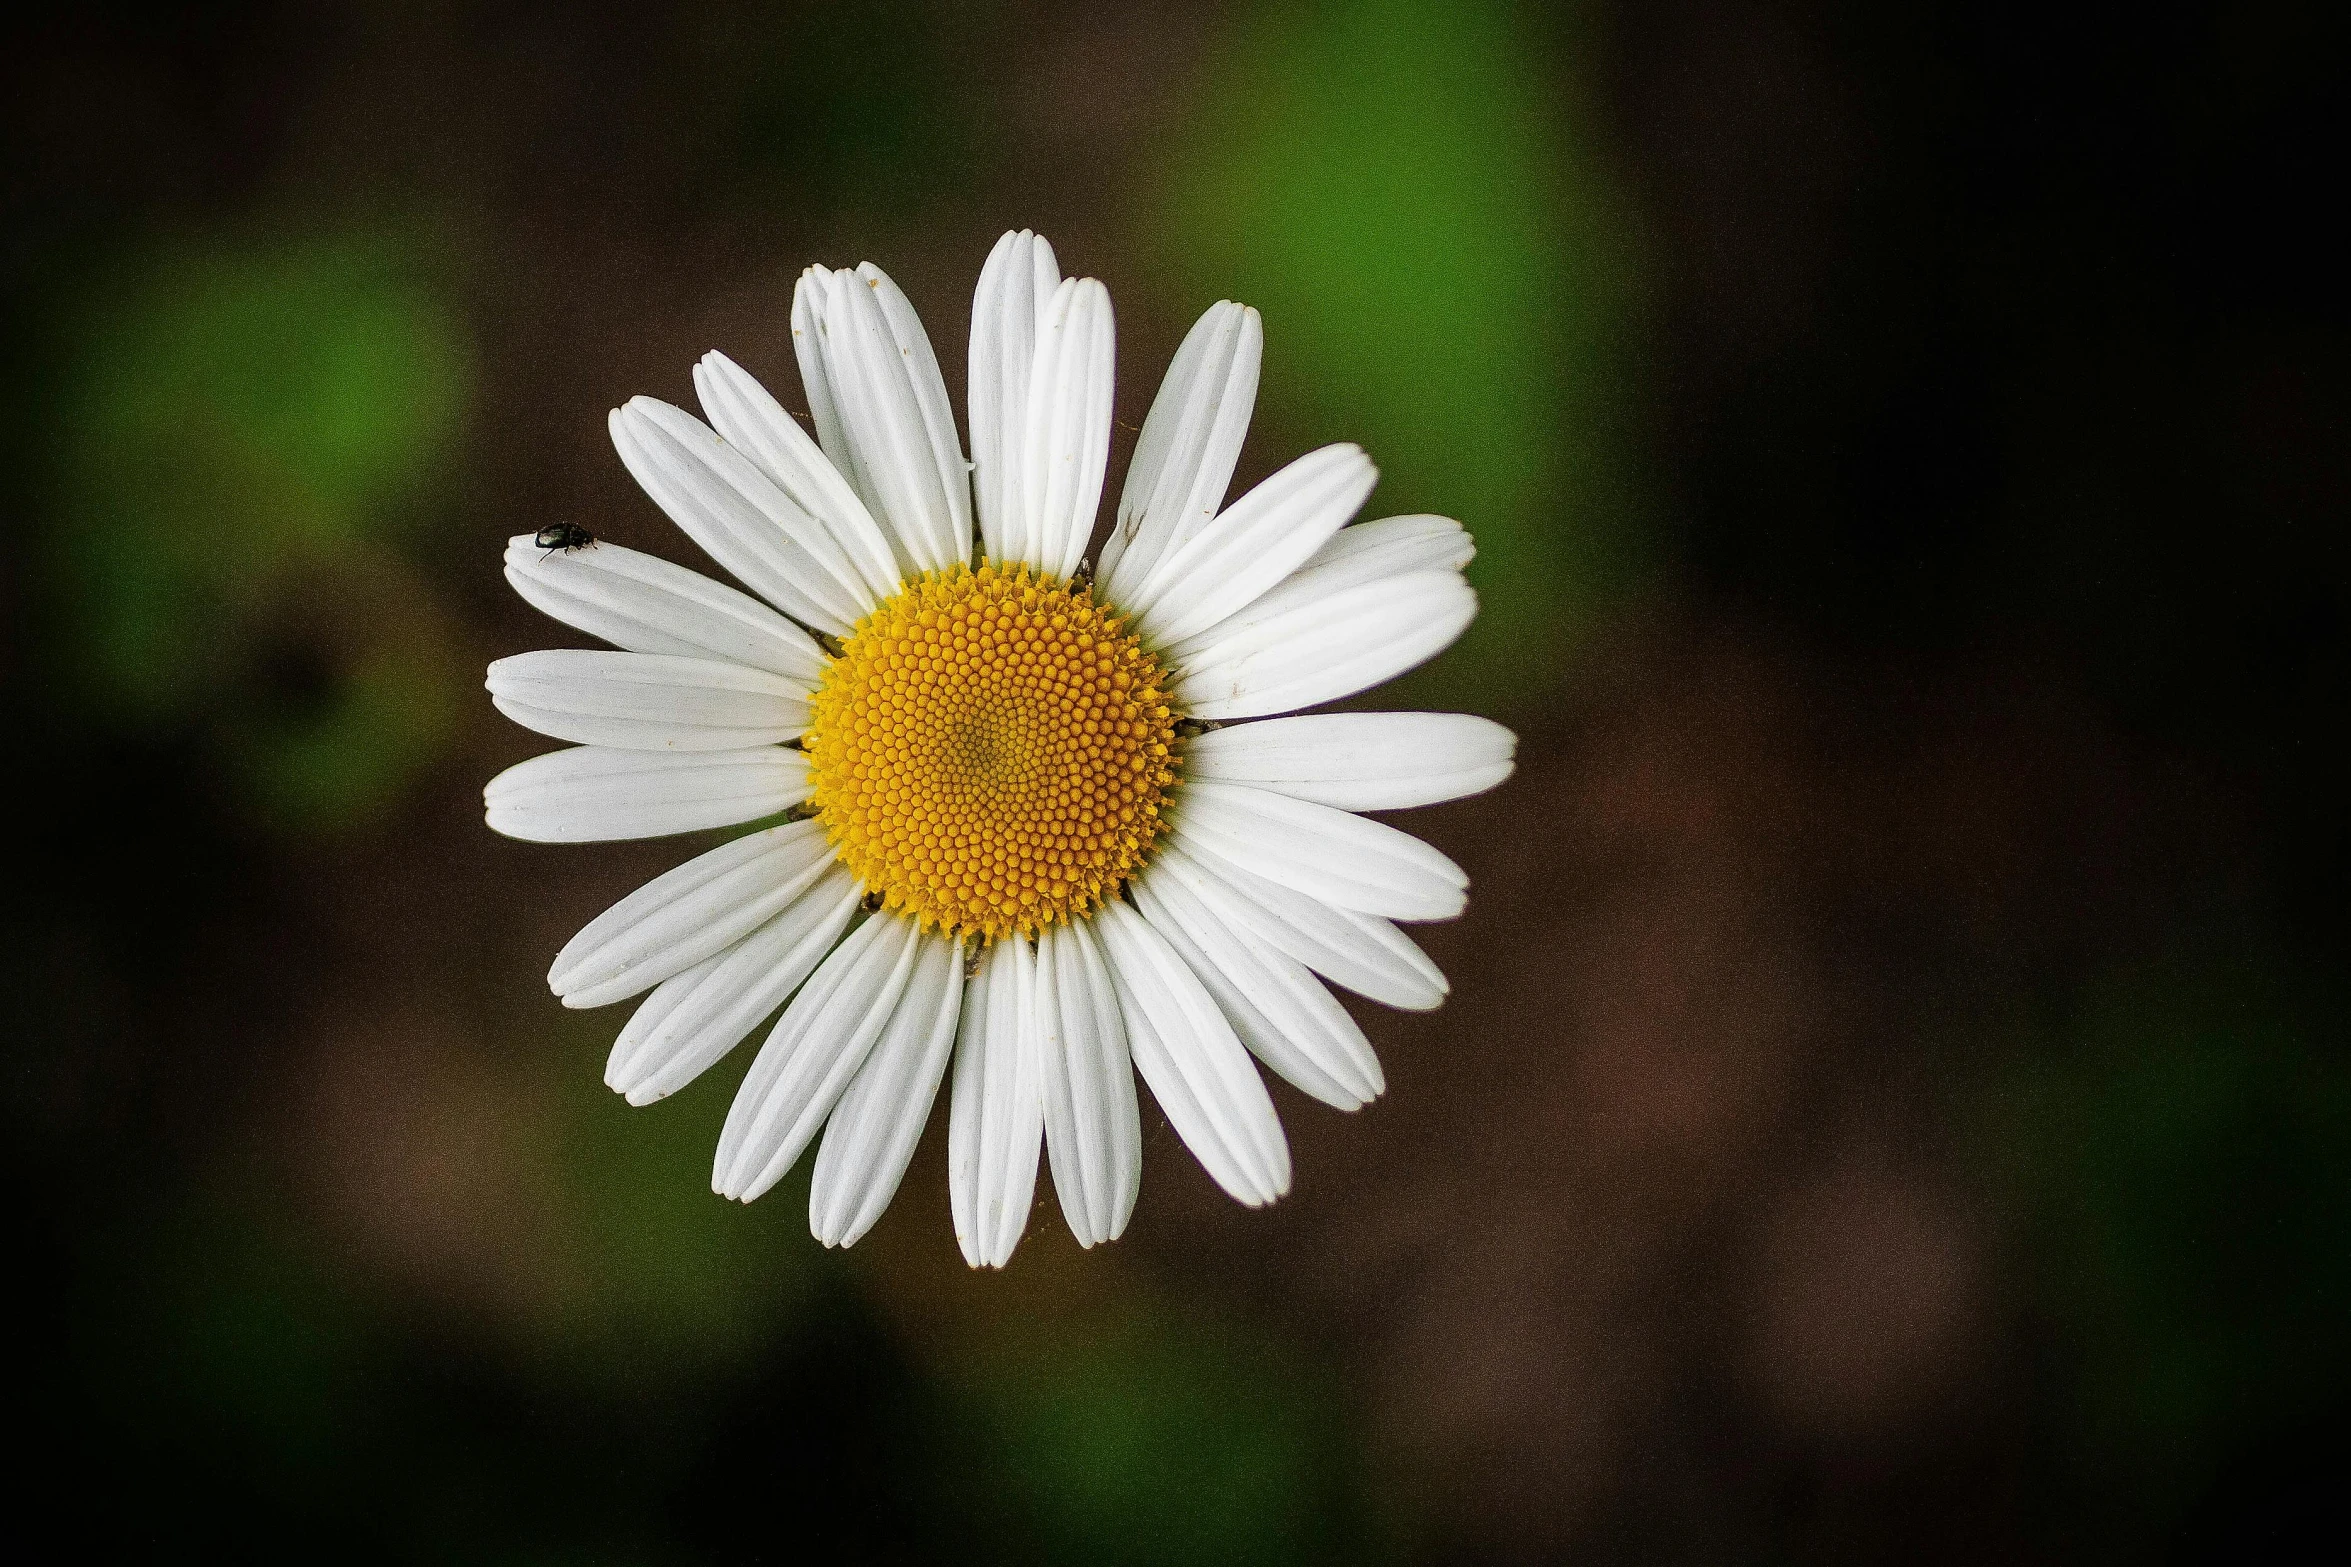 a close - up po of a white daisy